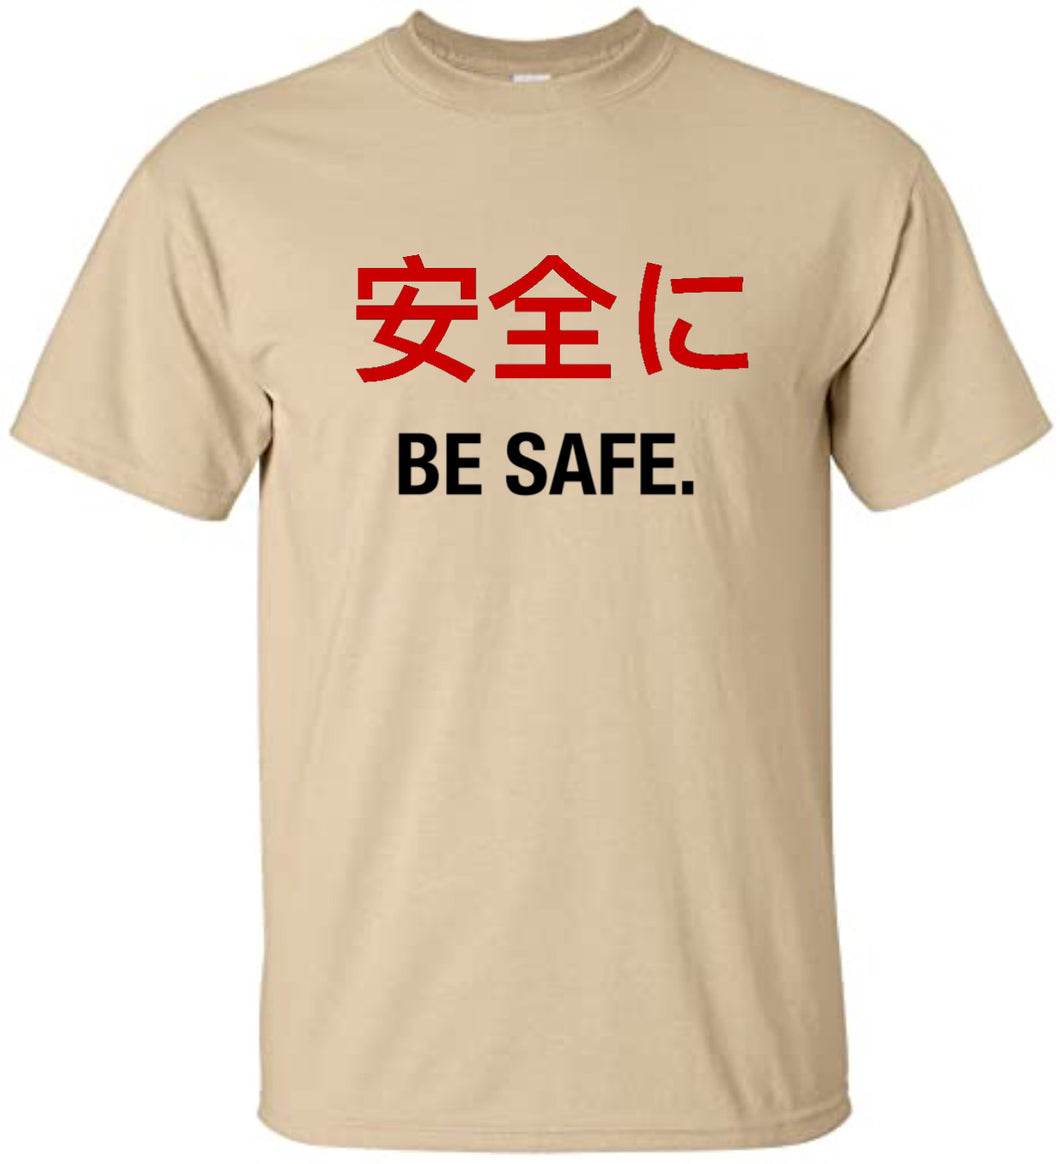 Be Safe tshirts